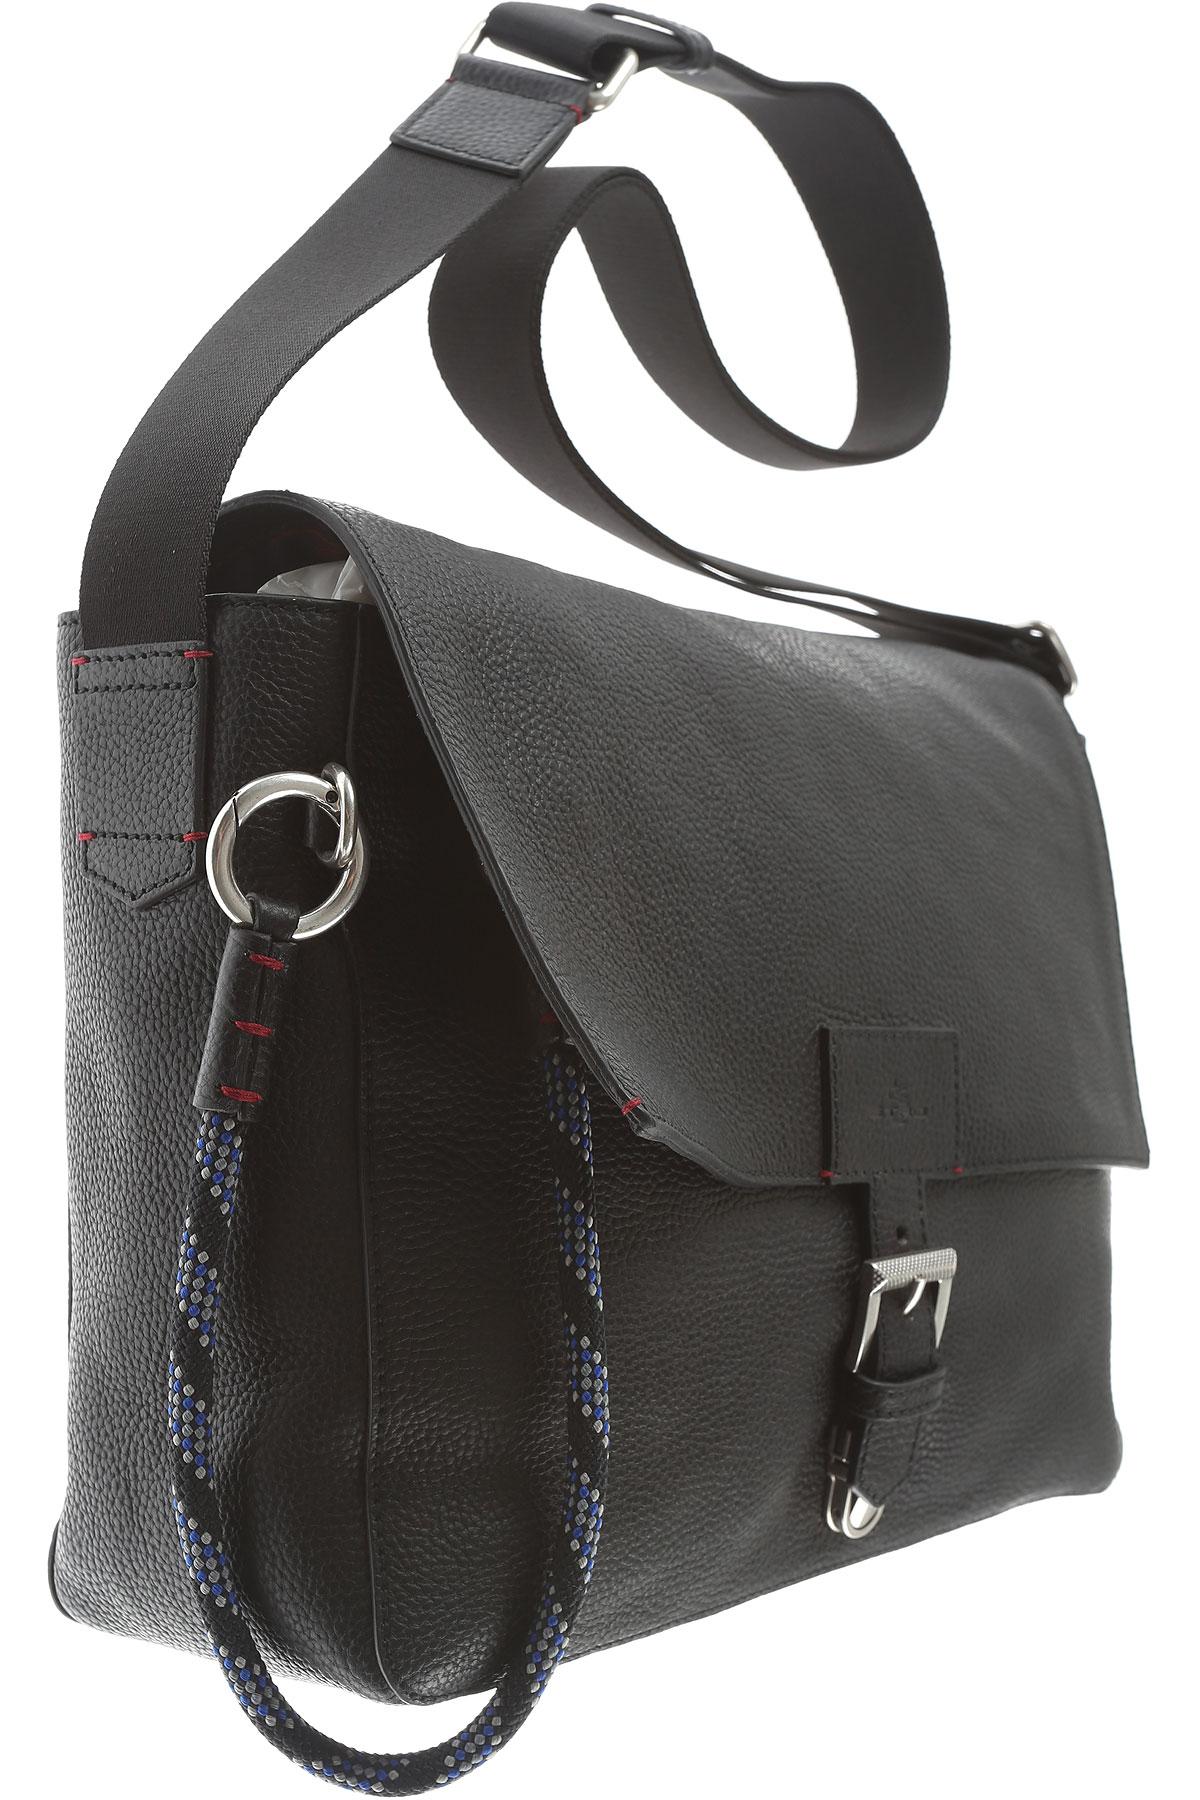 Etro Leather Messenger Bag For Men On Sale in Black for Men - Lyst